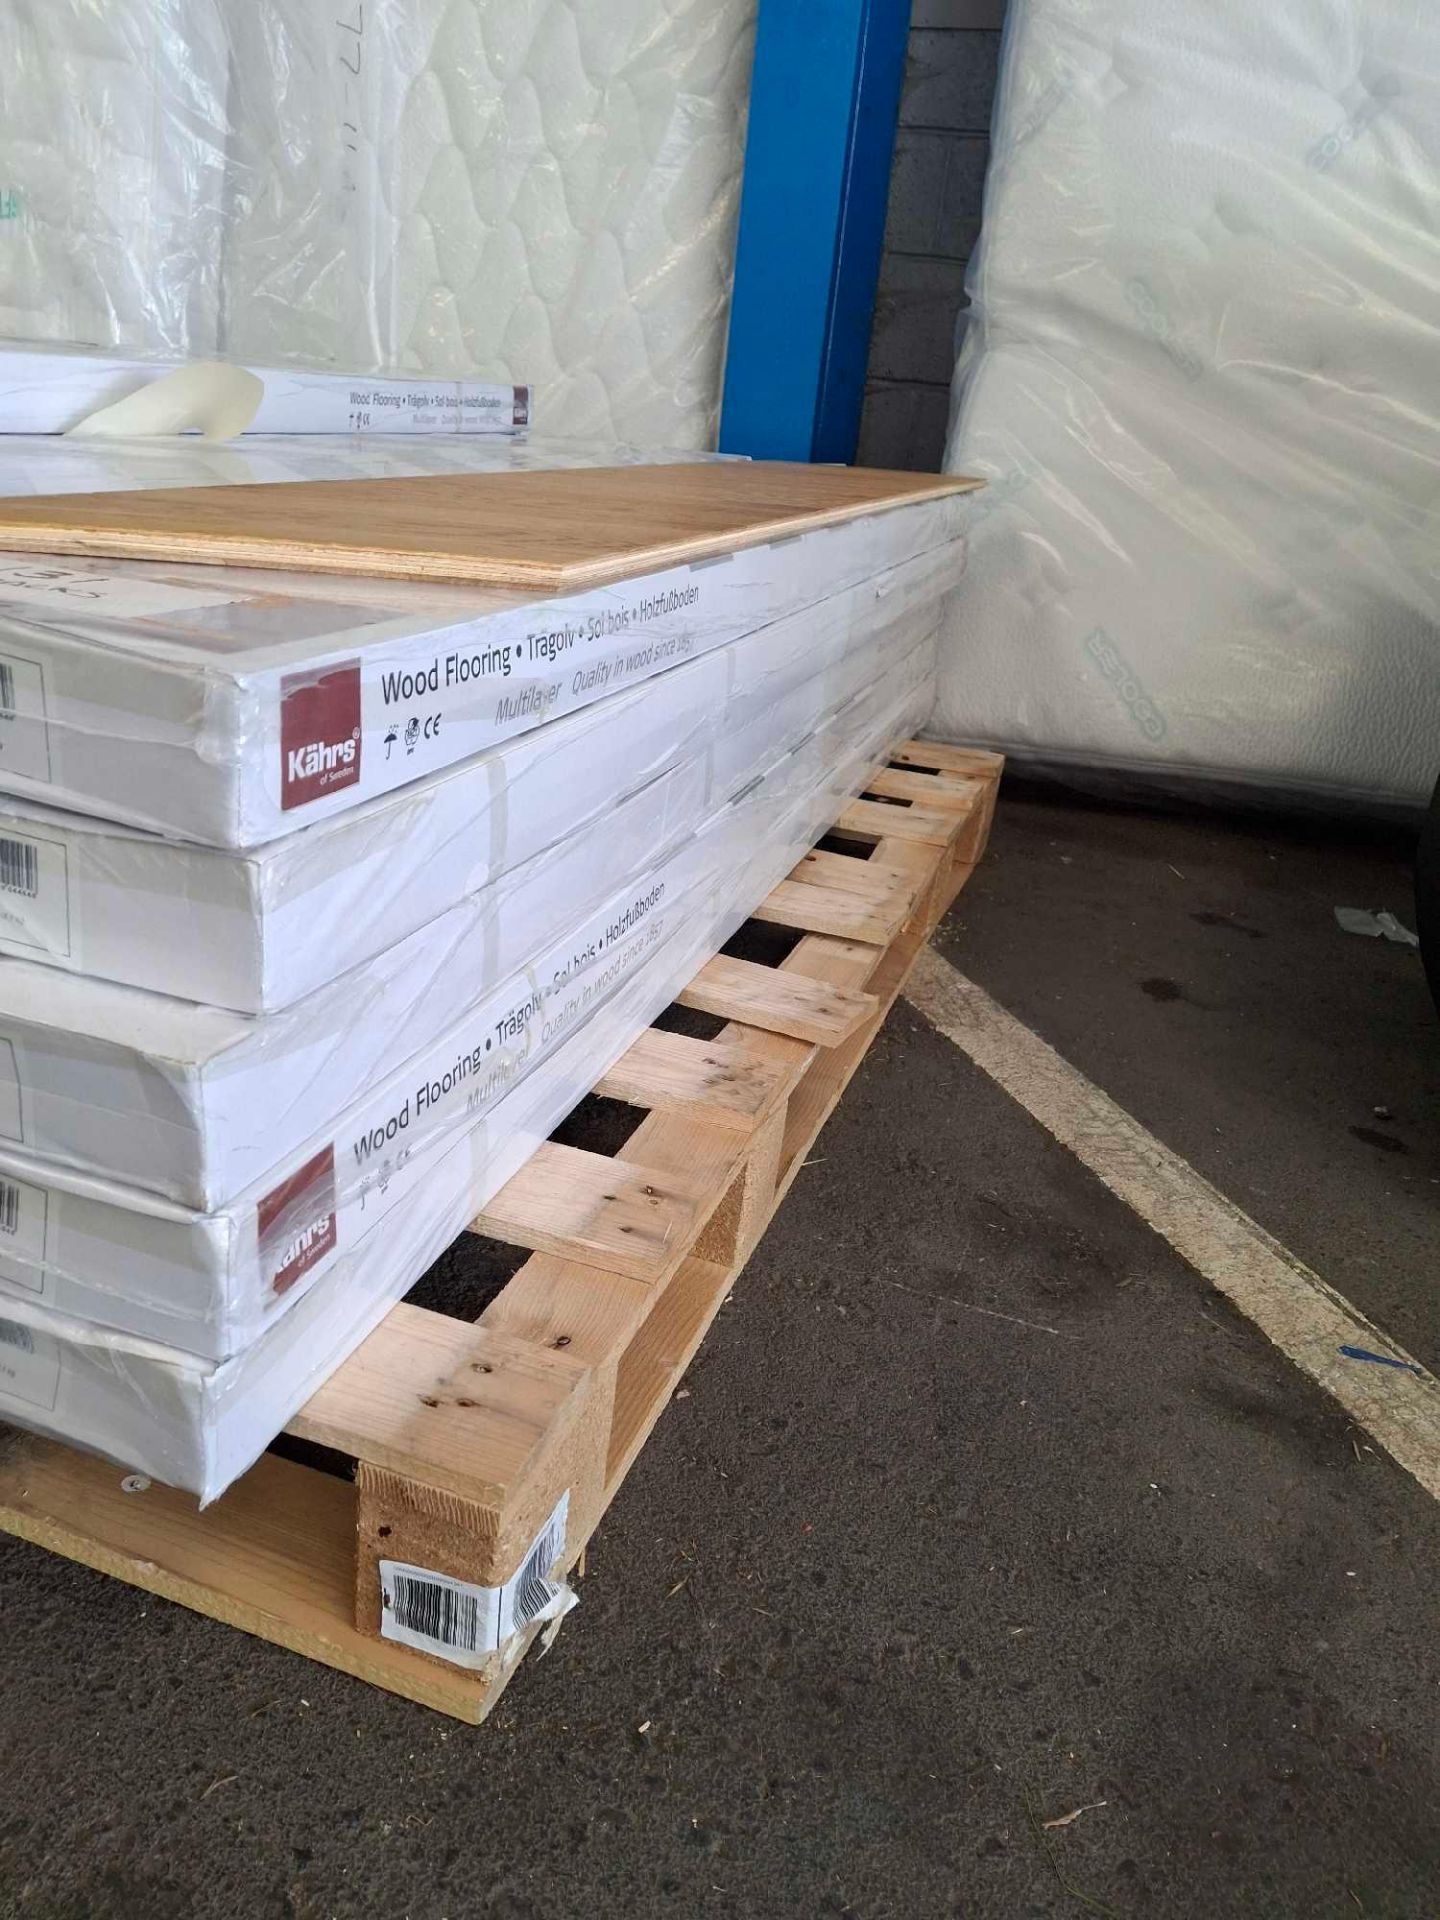 5 Packs of KÃ¤hrs Wood Flooring Chevron Light Brown Oiled 1848mm x 305mm x 15mm Per Plank 4 Per Pack - Image 2 of 5